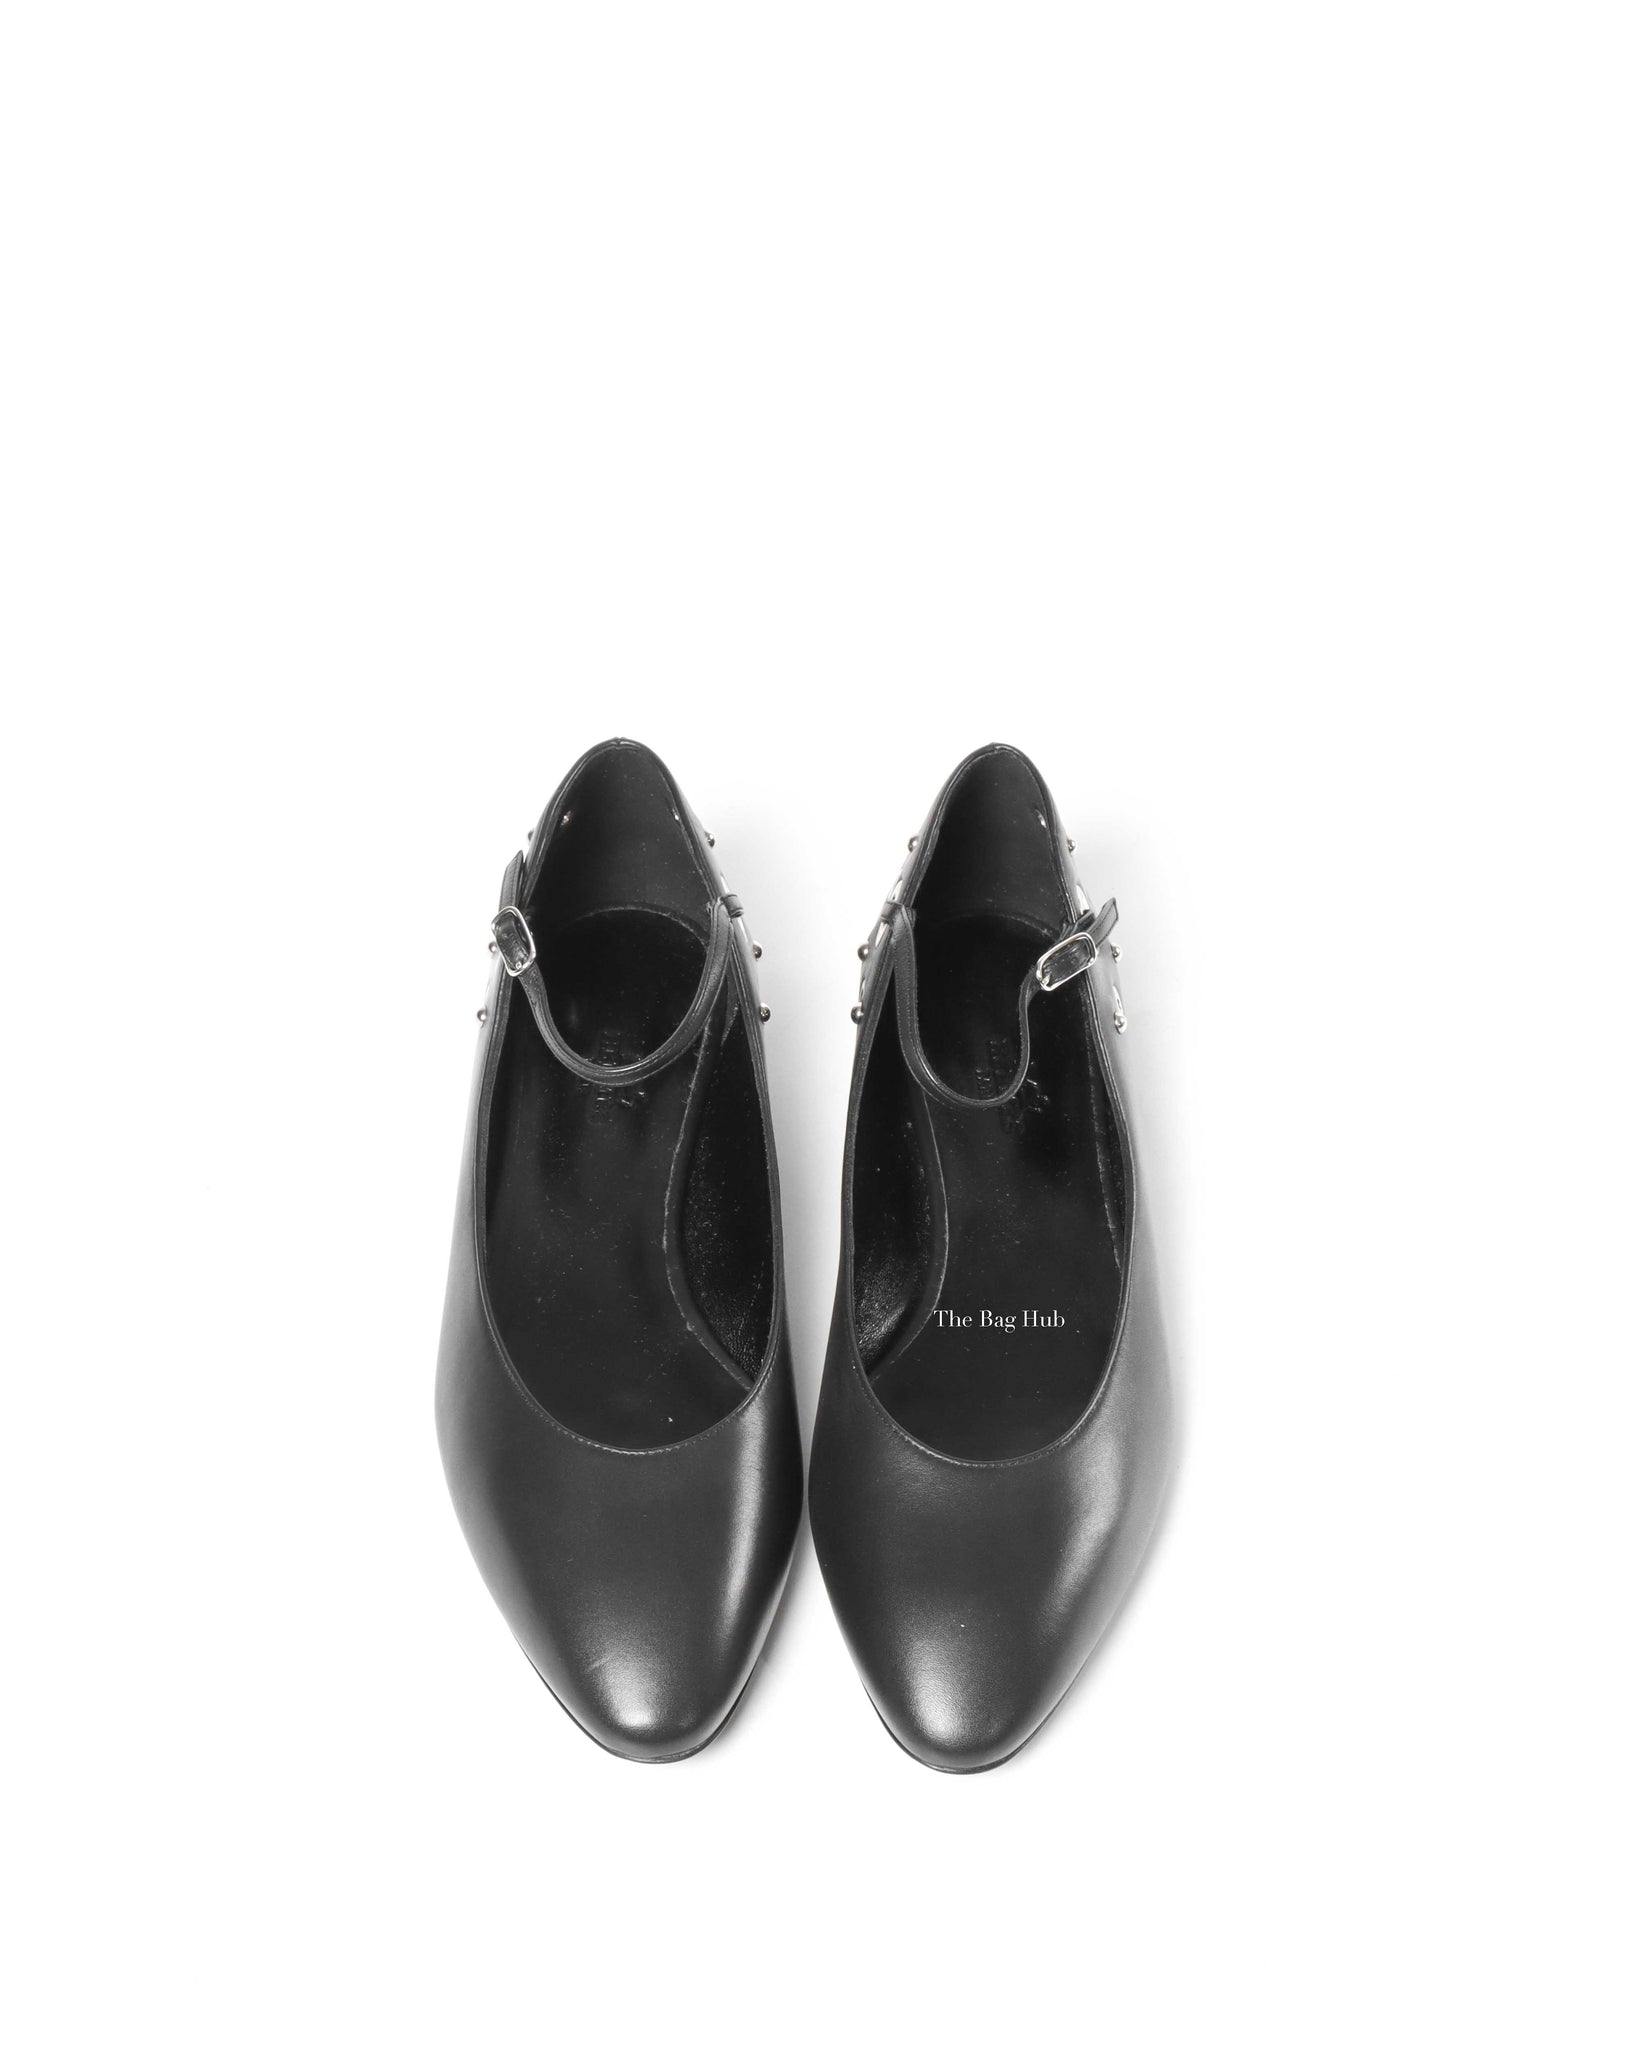 Hermes Black Leather Pepite Flats Size 39-8